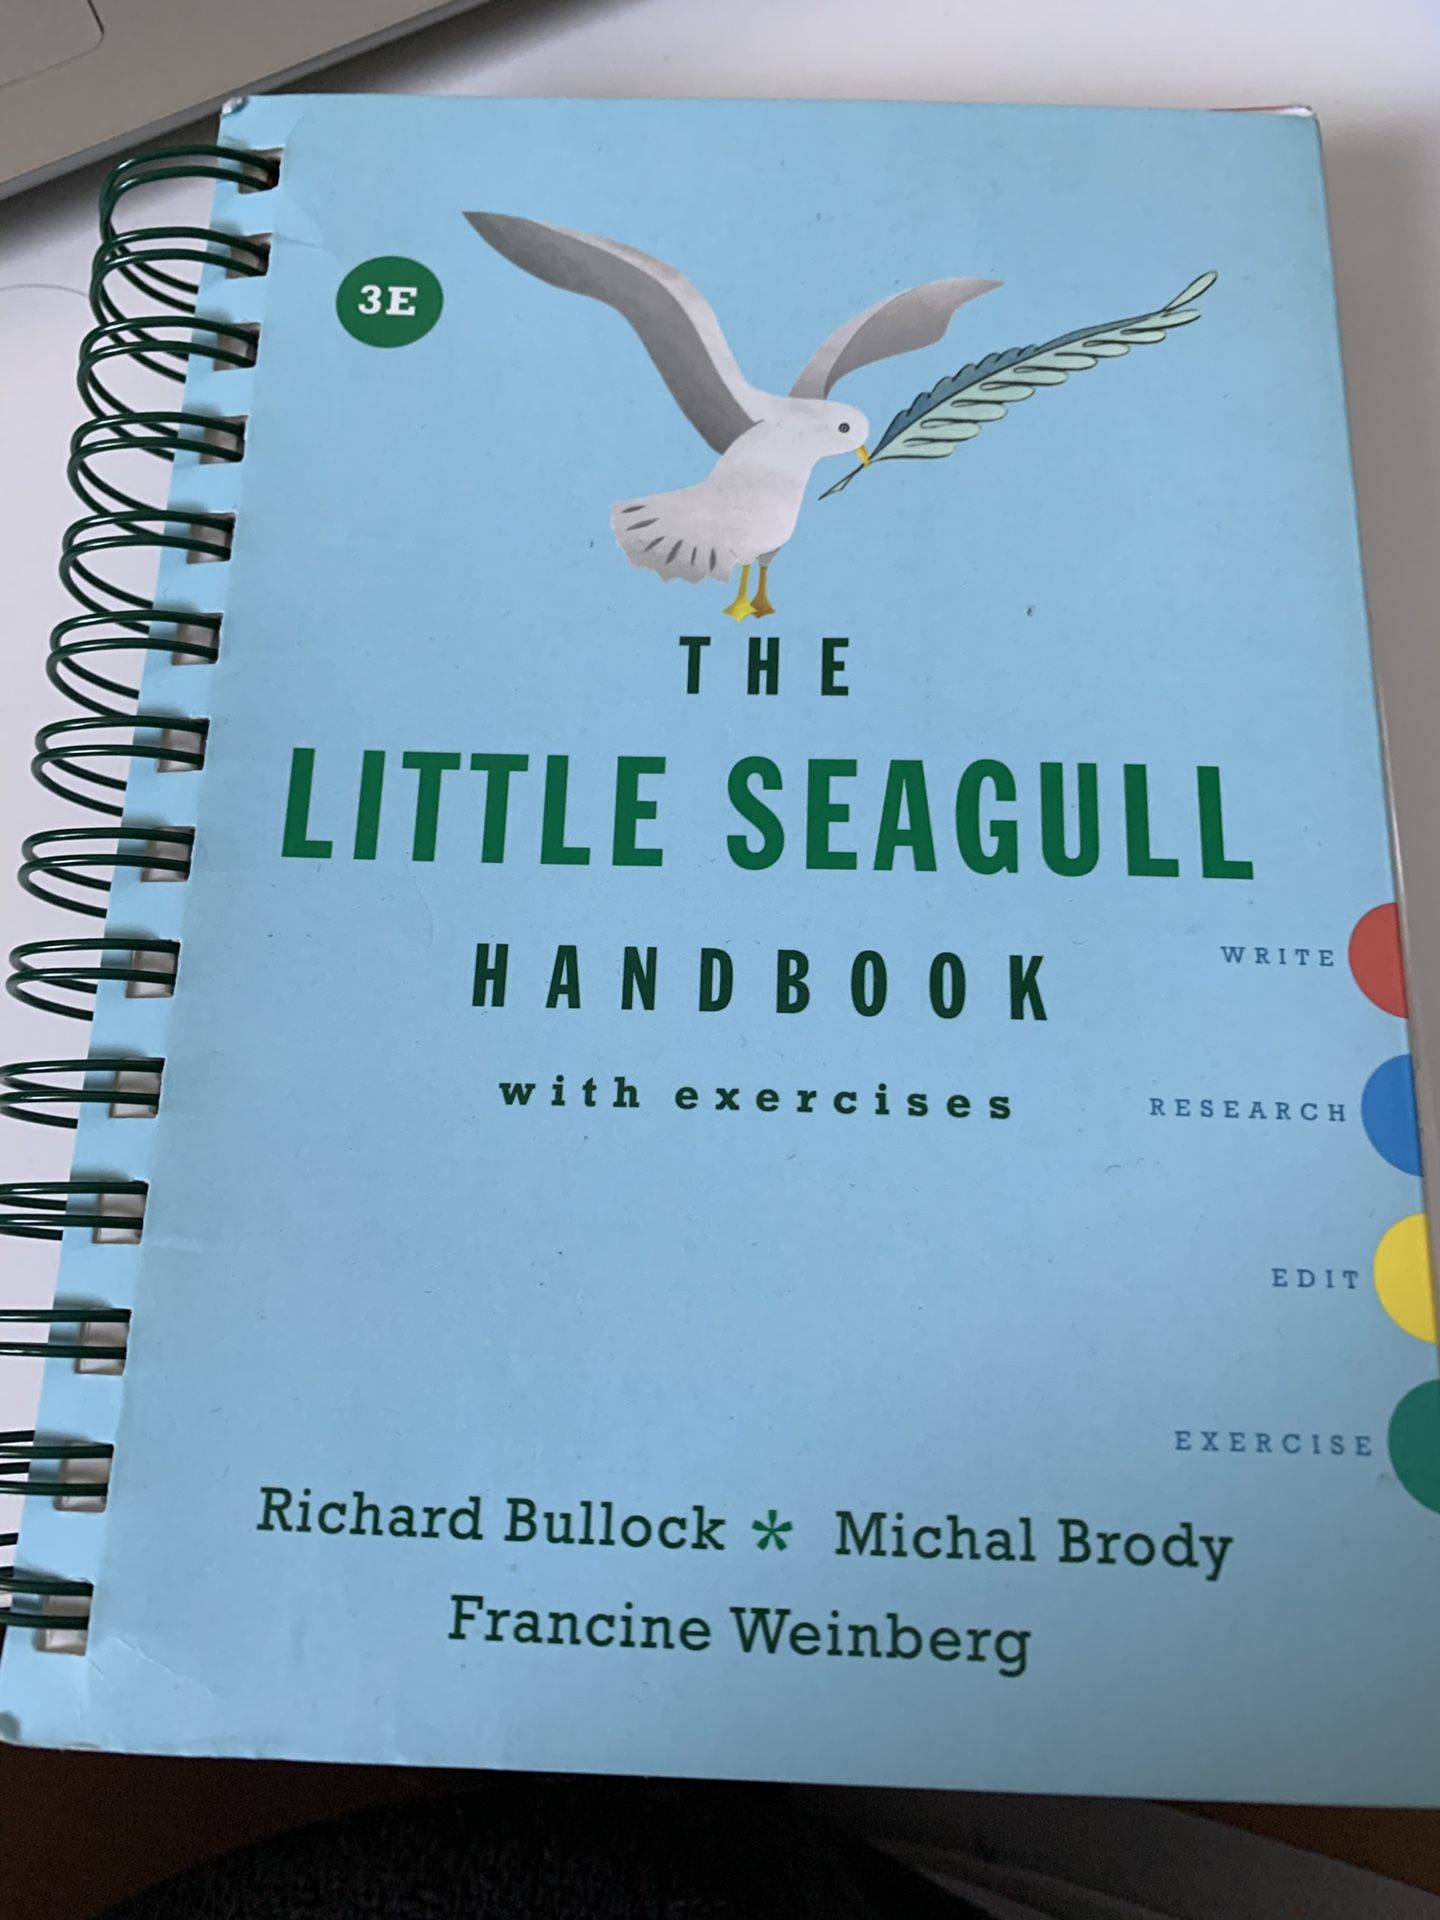 The little seagull handbook